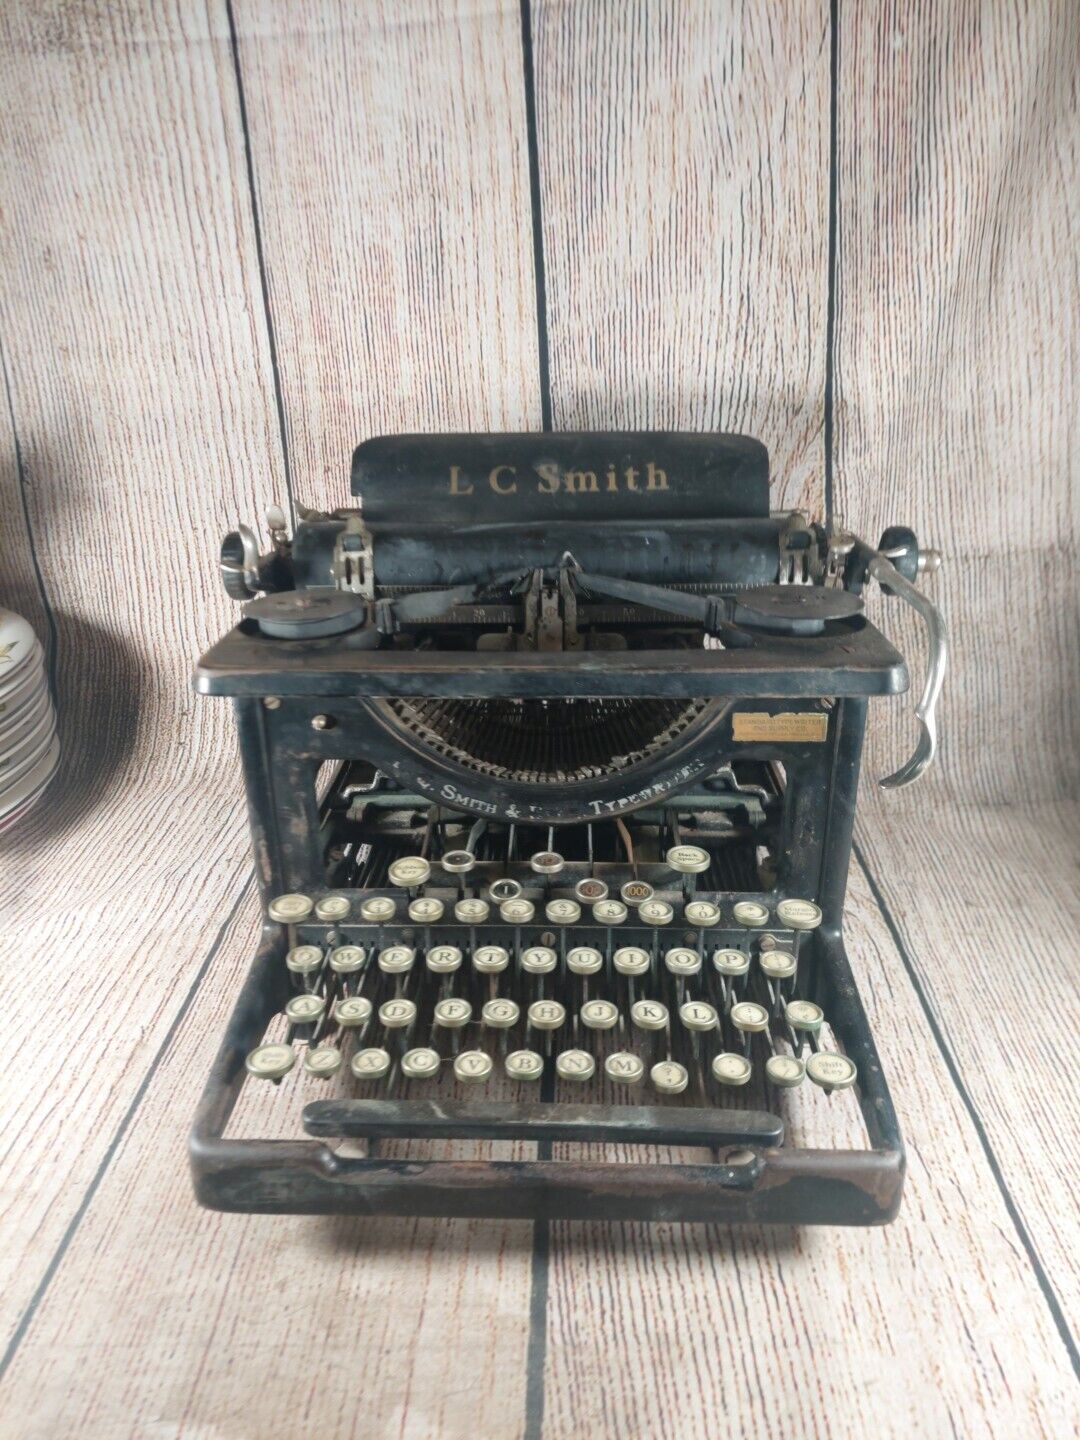 Vintage L.C. Smith Typewriter Early 1900's